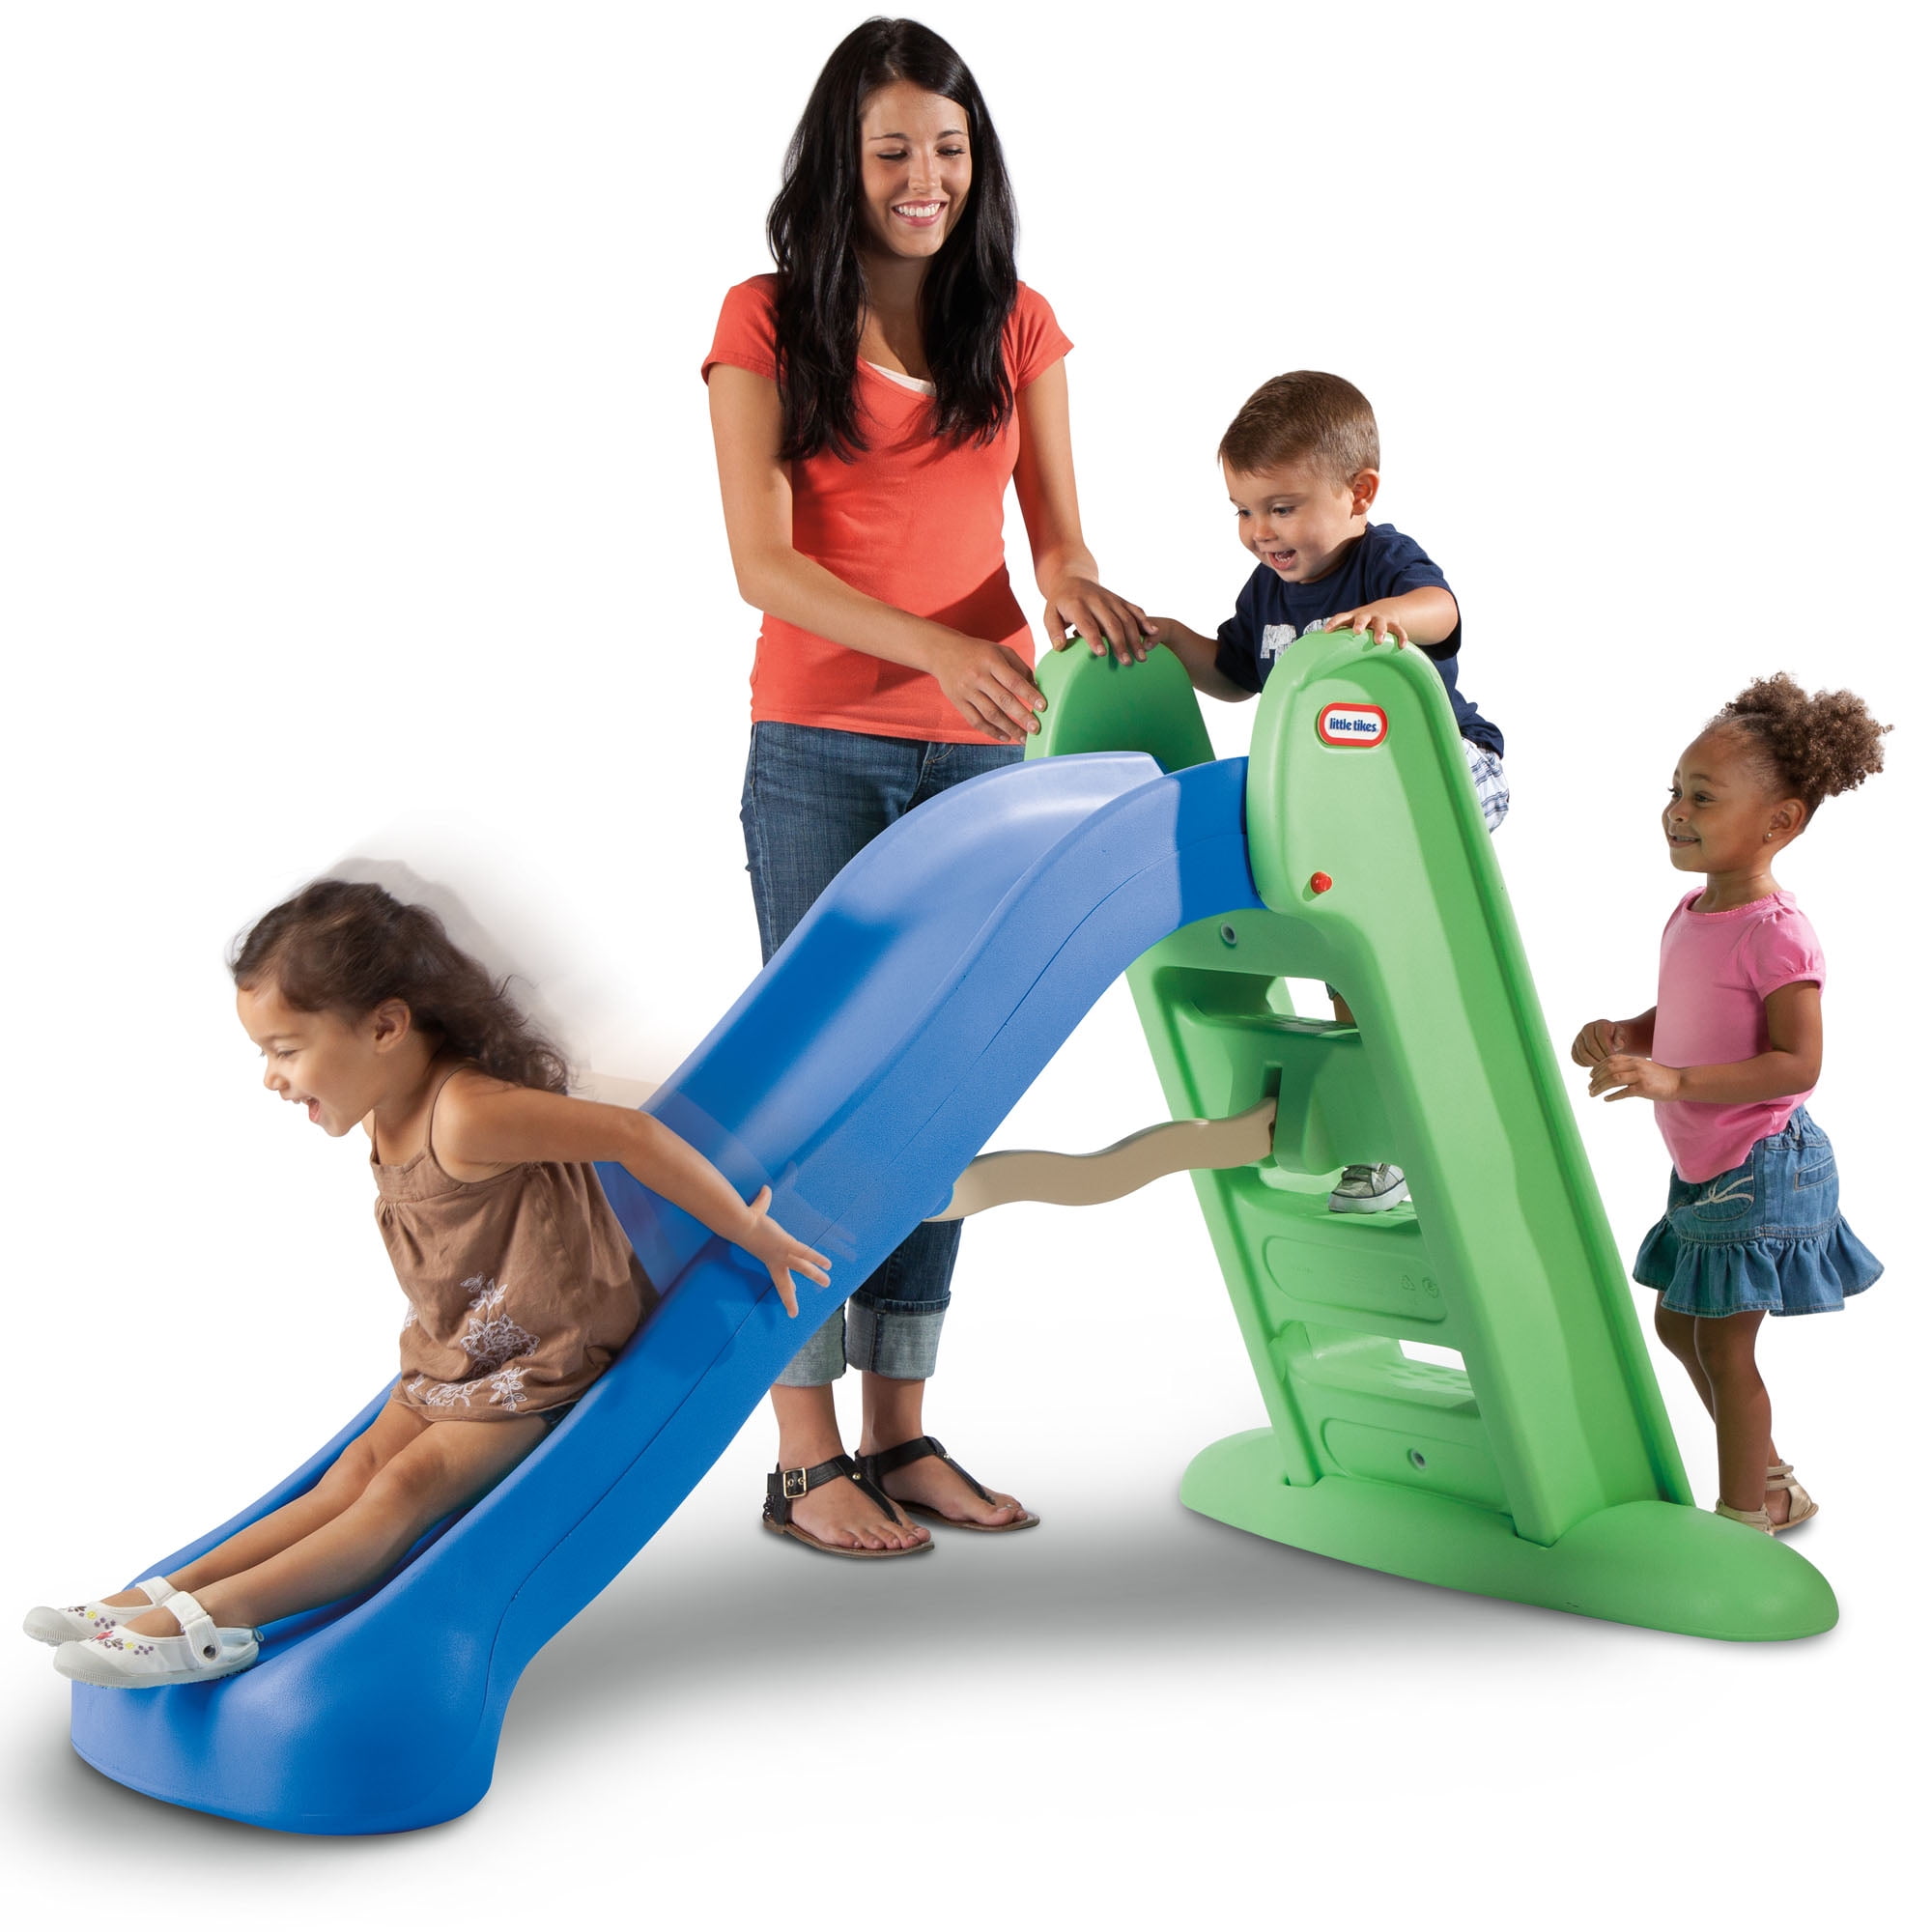 Folding First Climber Slide Set Kids Outdoor Indoor Toddler Play Fun Toy w/Ball 